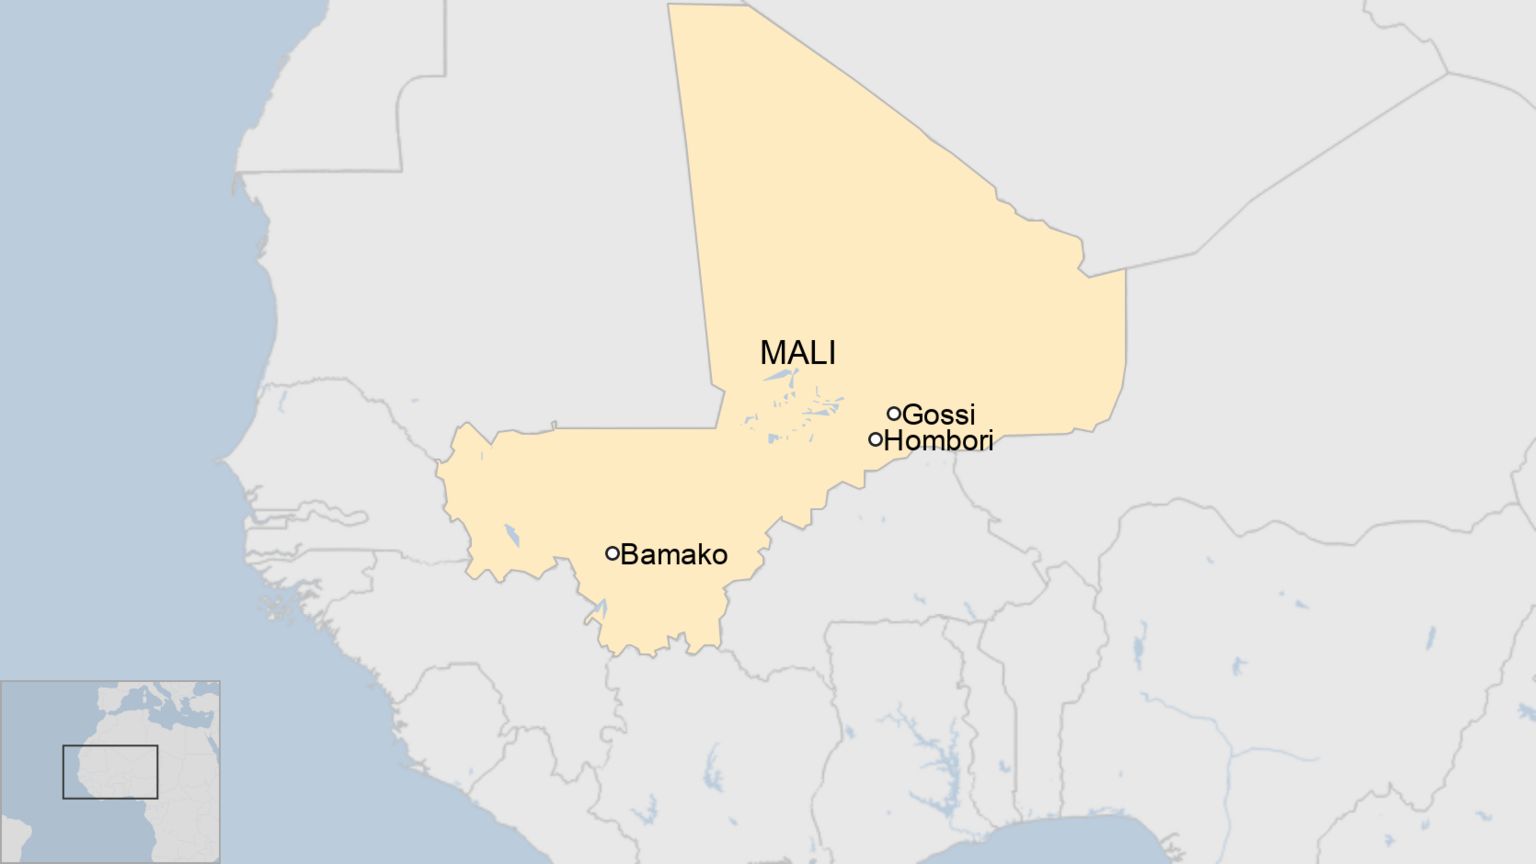 Map of Mali showing location of Bamako and Gossi and Hombori